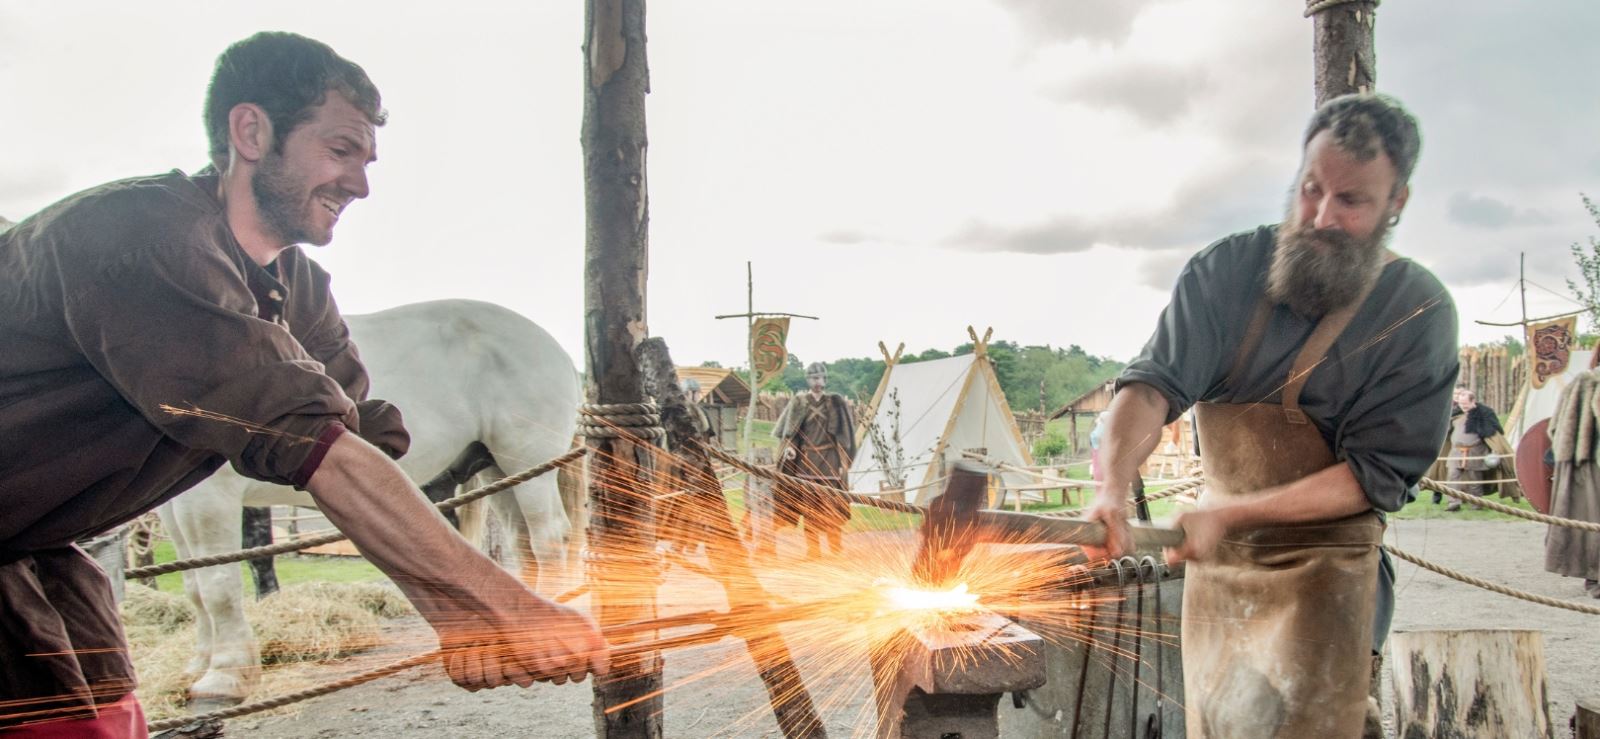 Blacksmiths forge in the viking village